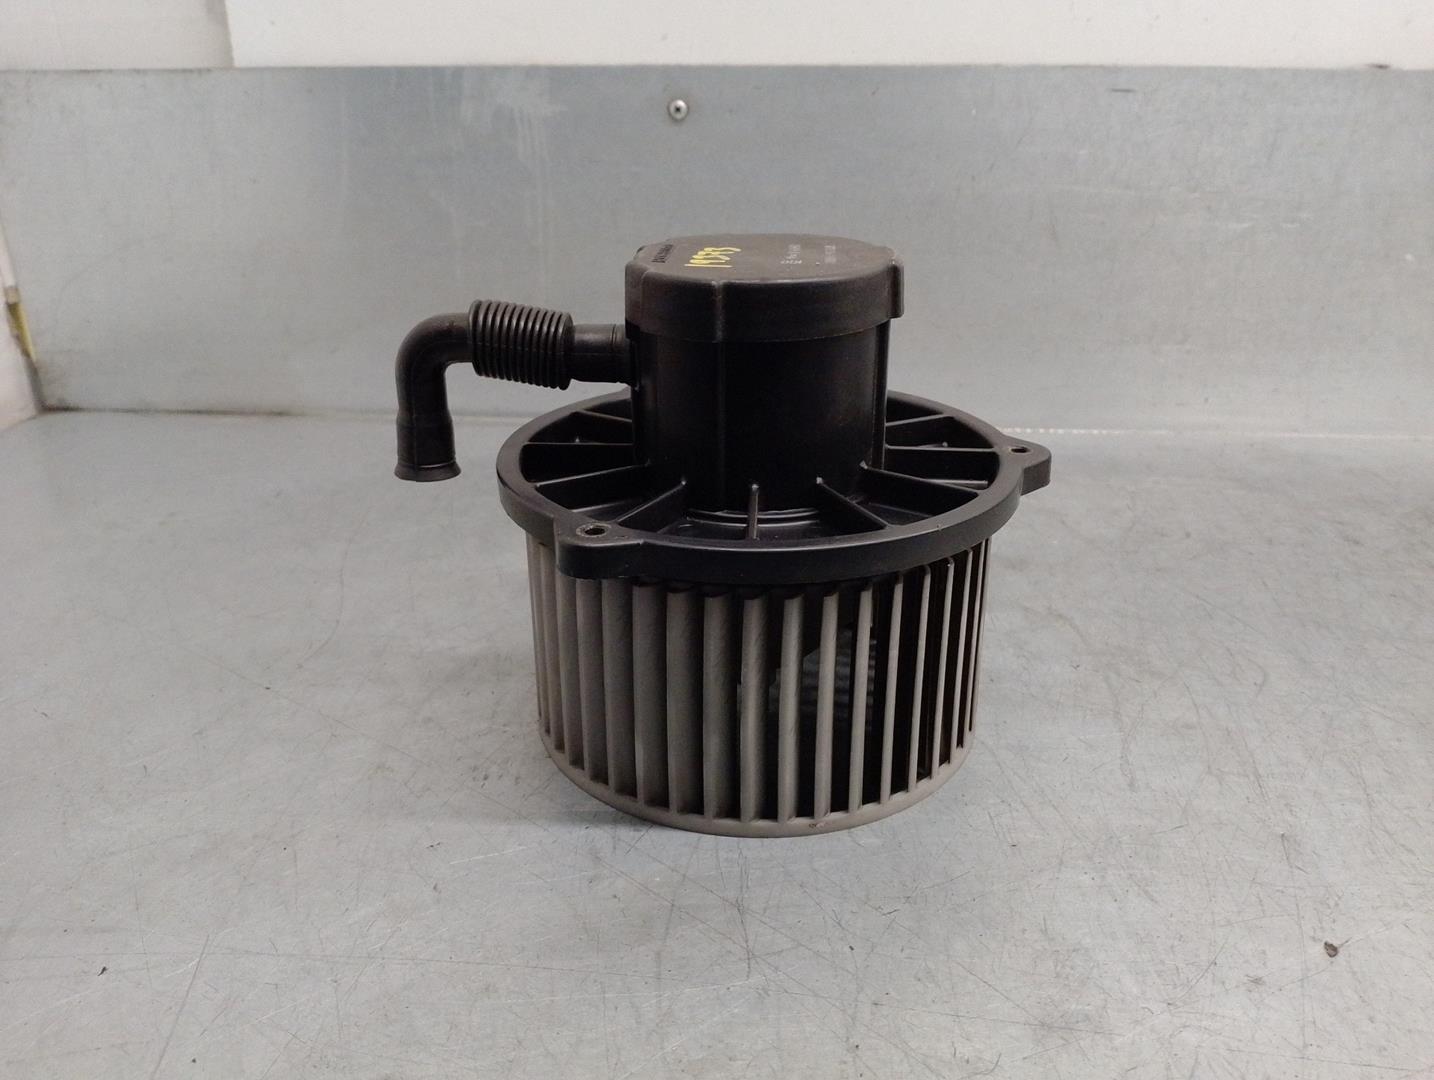 HYUNDAI RD (1 generation) (1996-2002) Heater Blower Fan 971162495 24190595